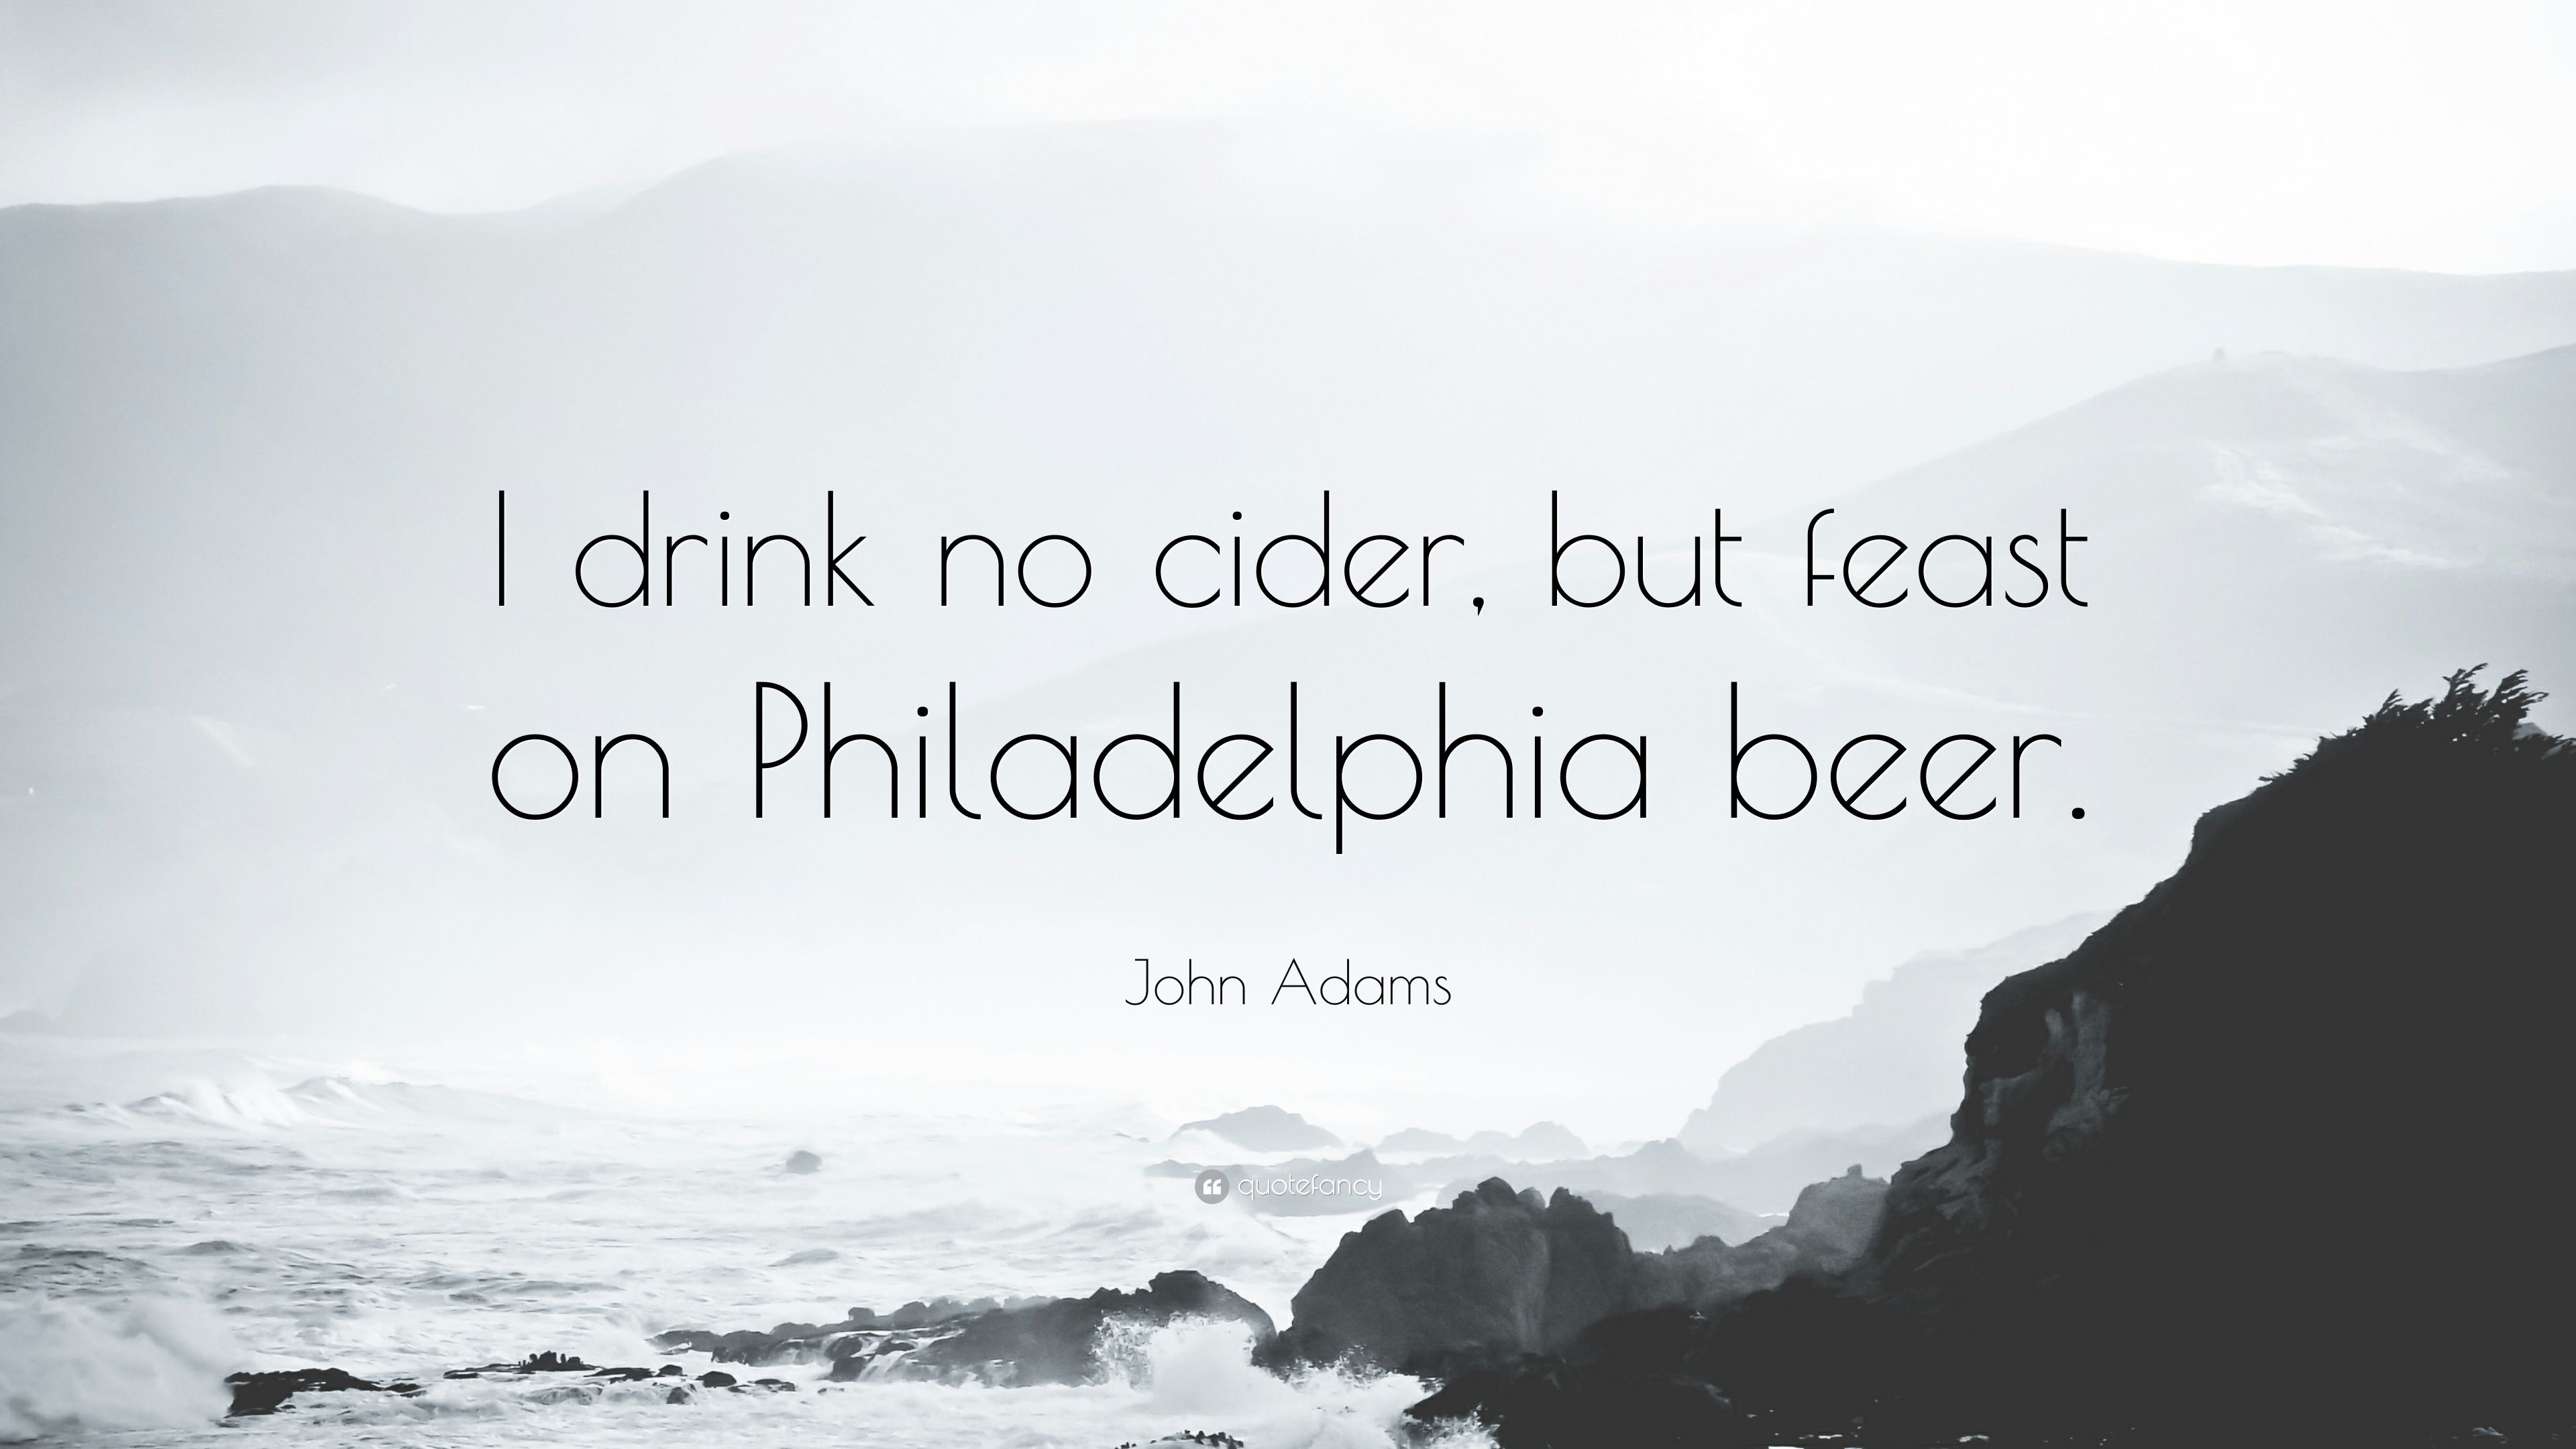 John Adams Quote: “I drink no cider .quotefancy.com